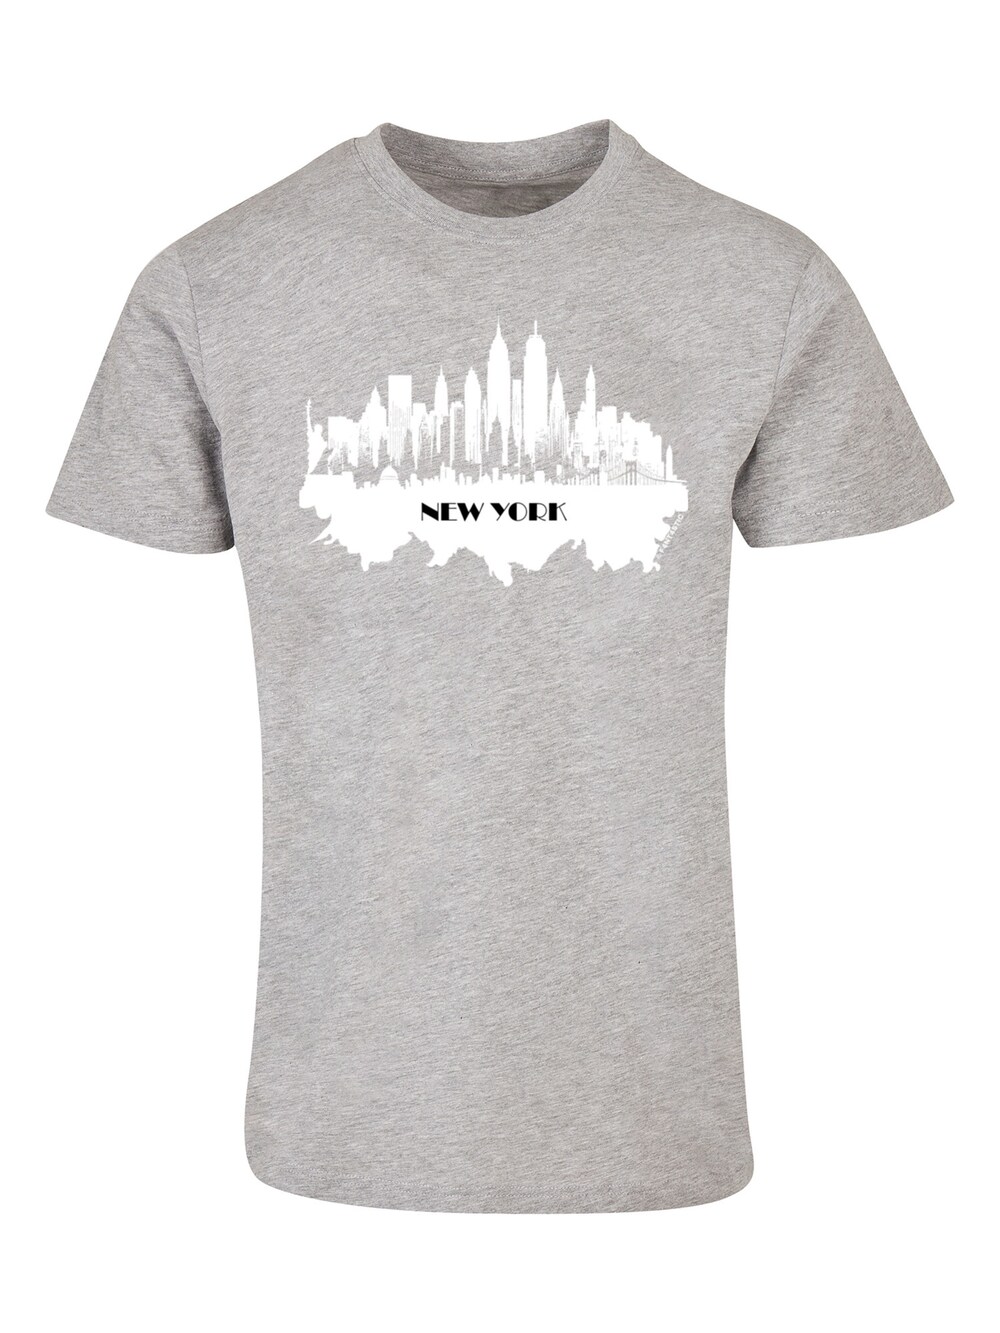 Футболка F4Nt4Stic Cities Collection - New York skyline, серый